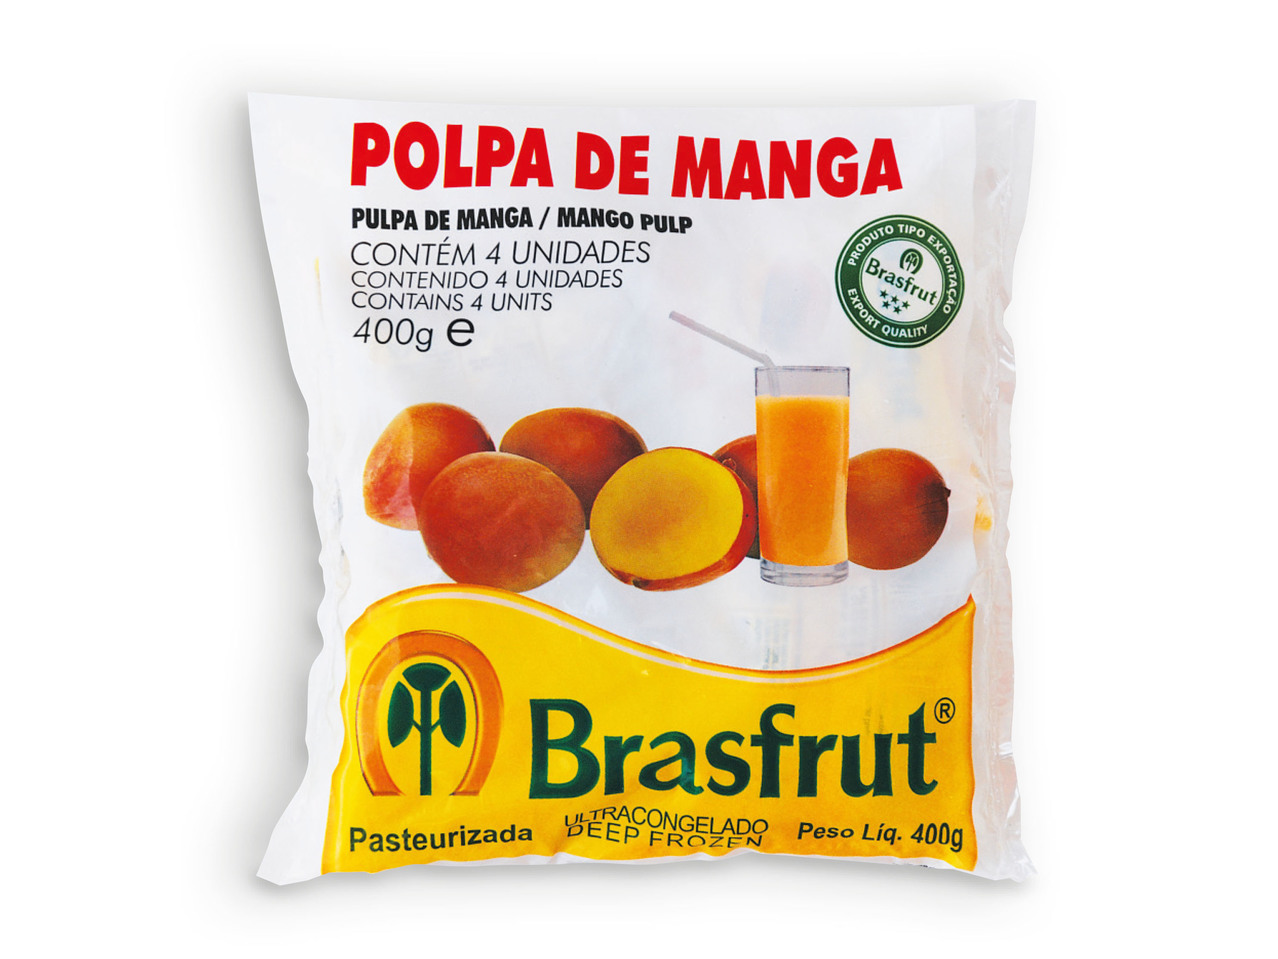 BRASFRUT(R) Polpa de Manga / Acerola / Abacaxi / Goiaba